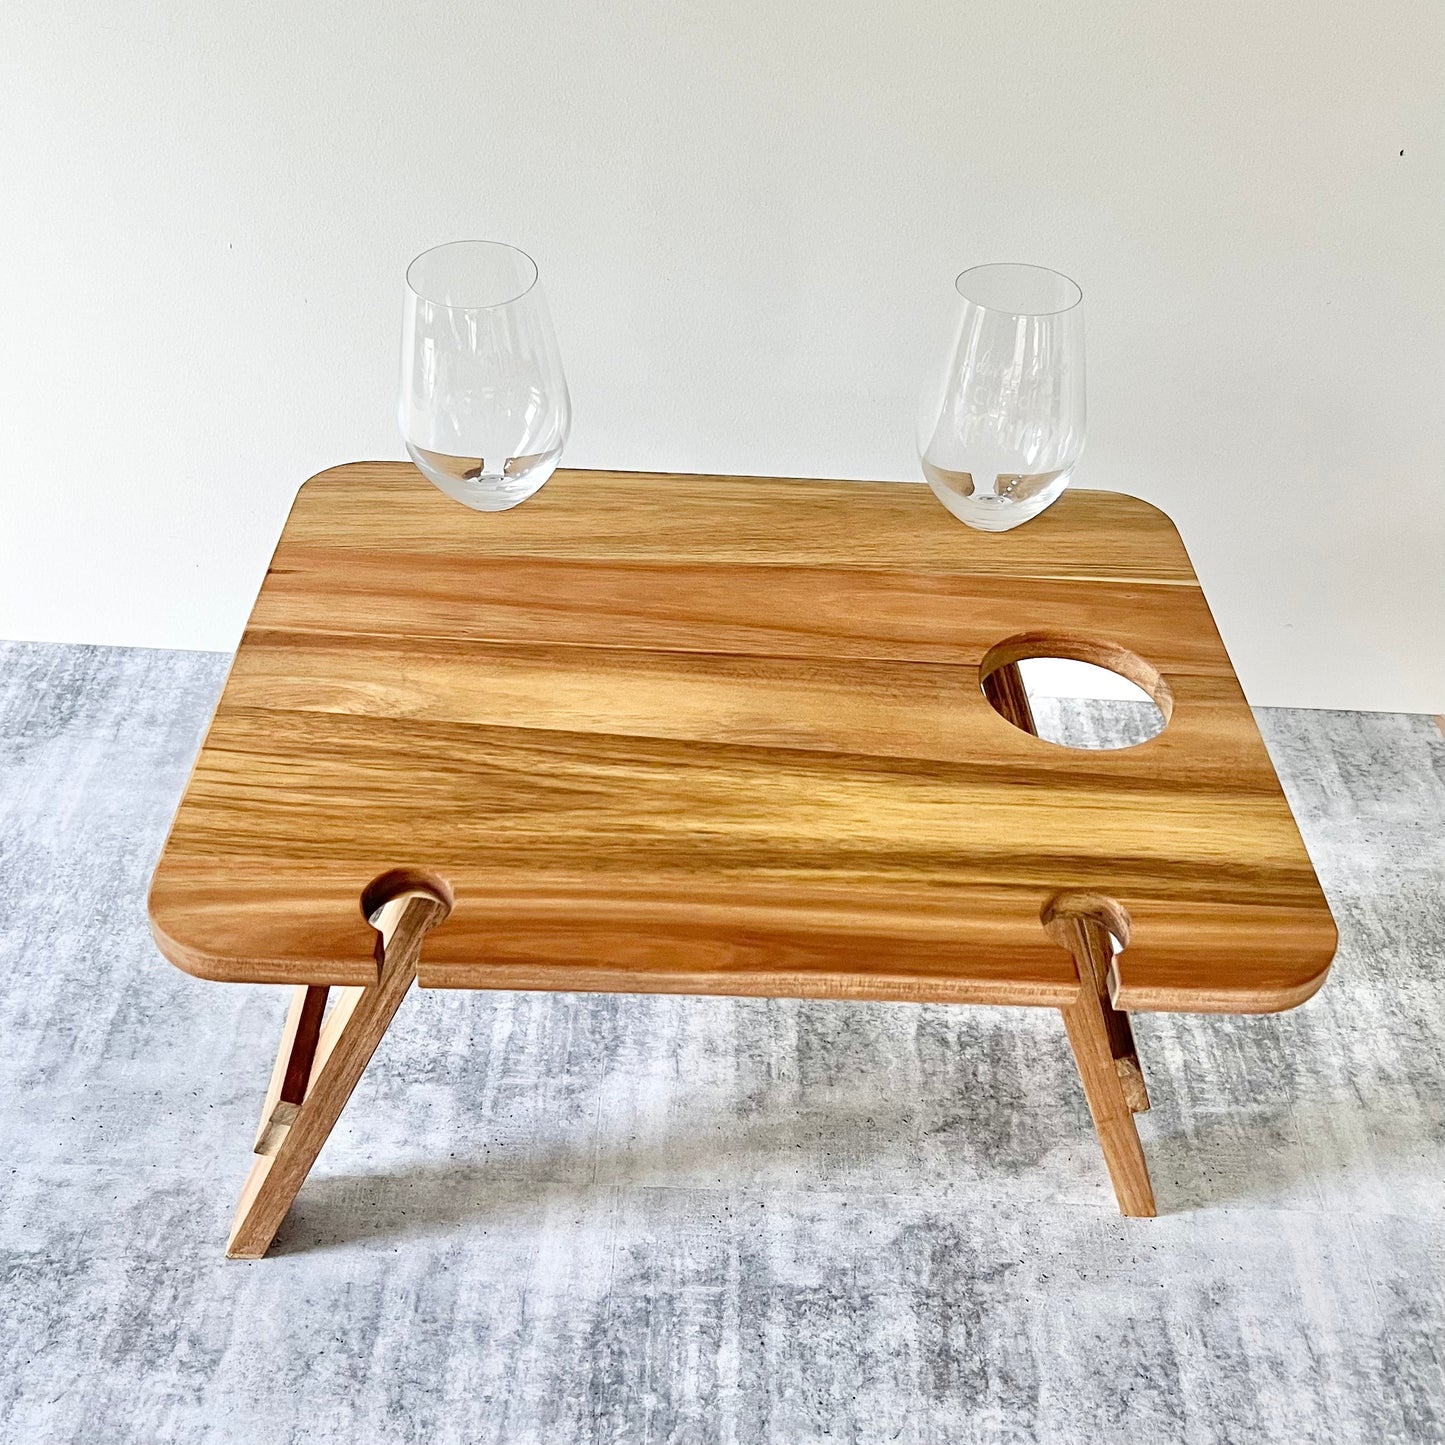 Wine & Cheese Picnic Table - custom design